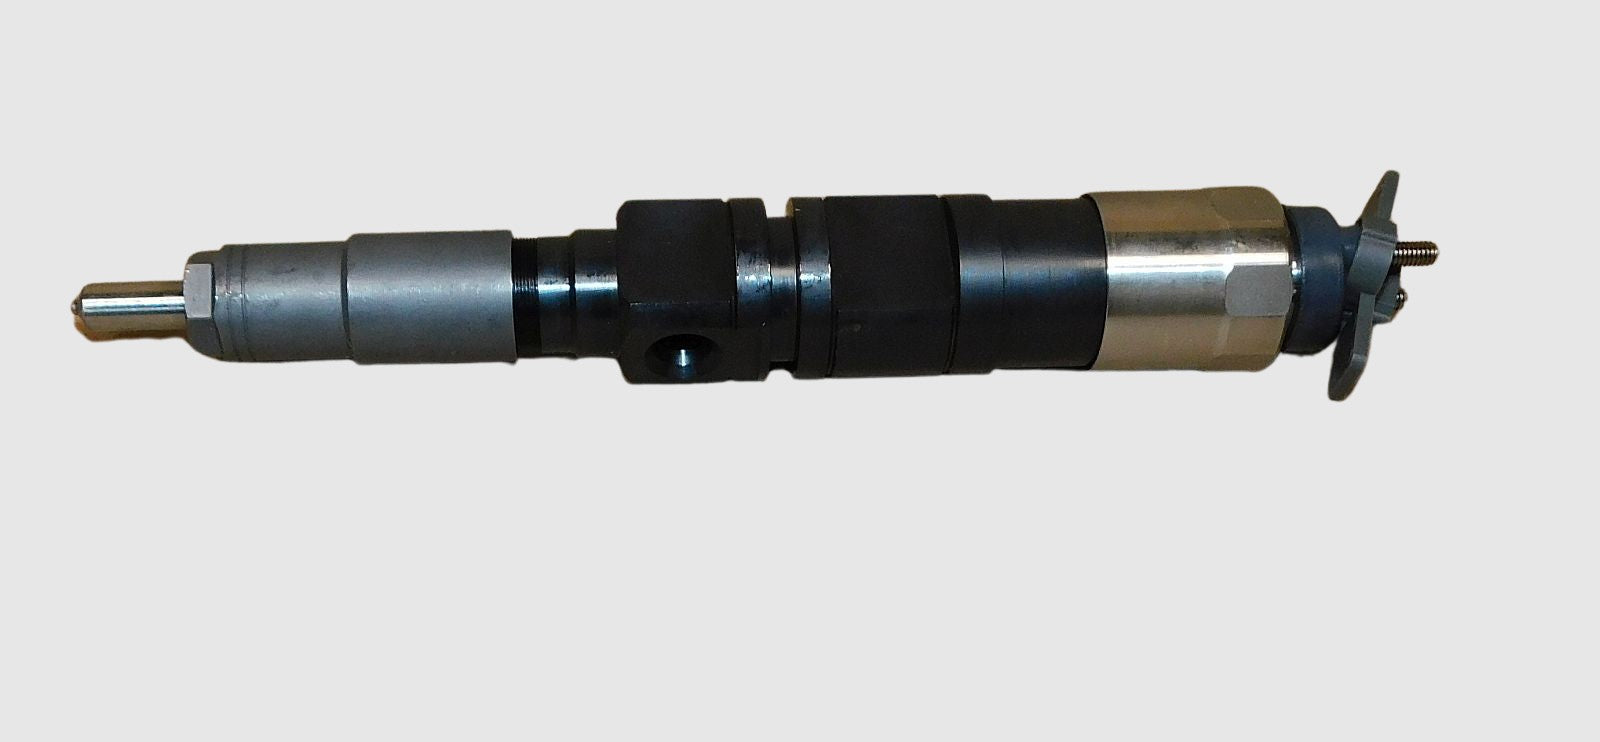 John Deere RE529117 Fuel Injector Nozzle 4045 & 6068 Motors New